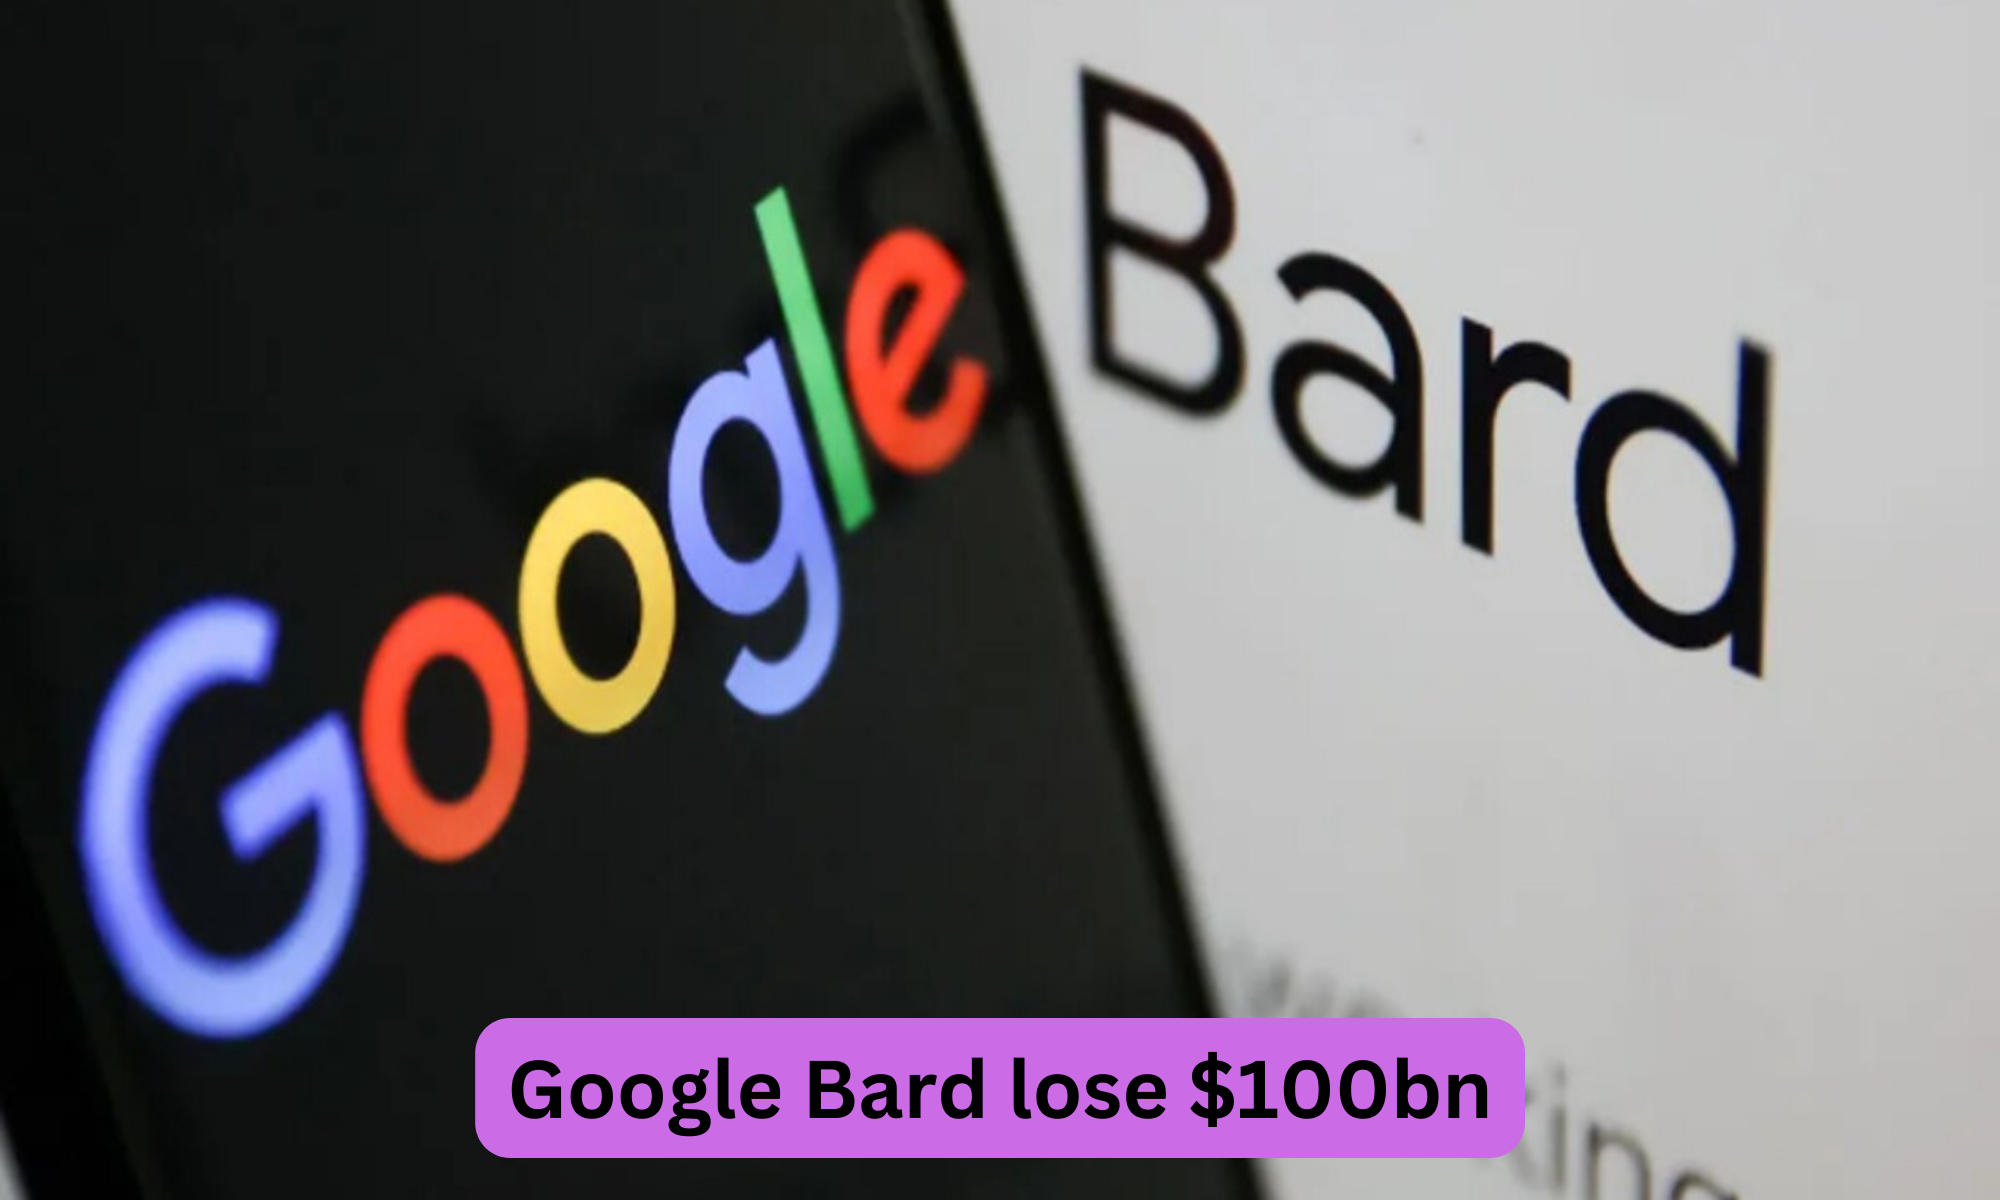 Google Bard lose $100bn